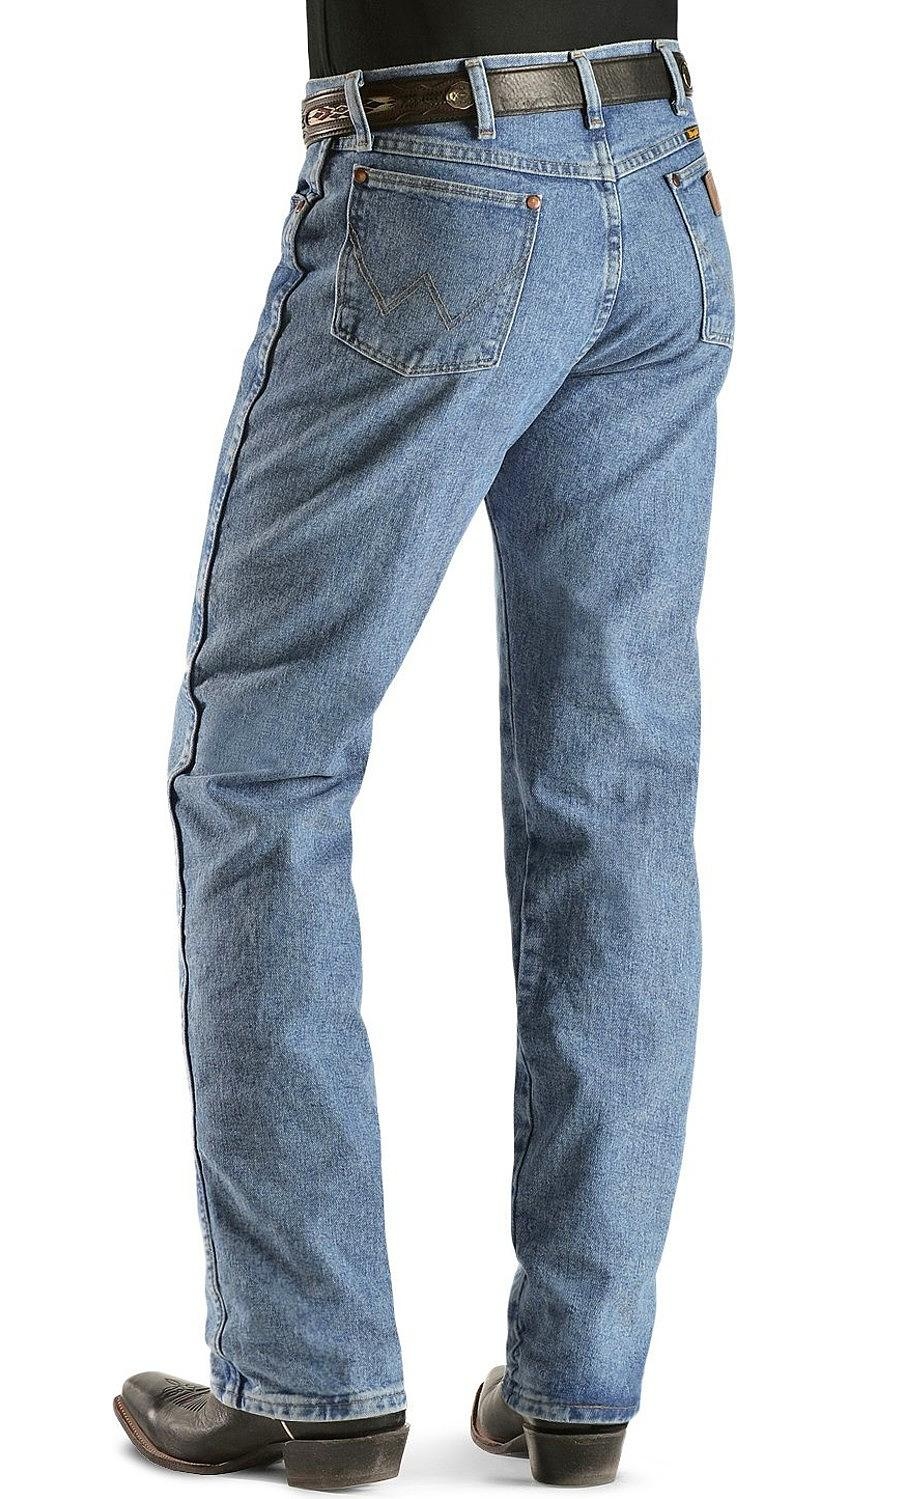 Wrangler Men's Jeans Relaxed Original fit premium wash reg - 13mwzro_x5 - image 1 of 2